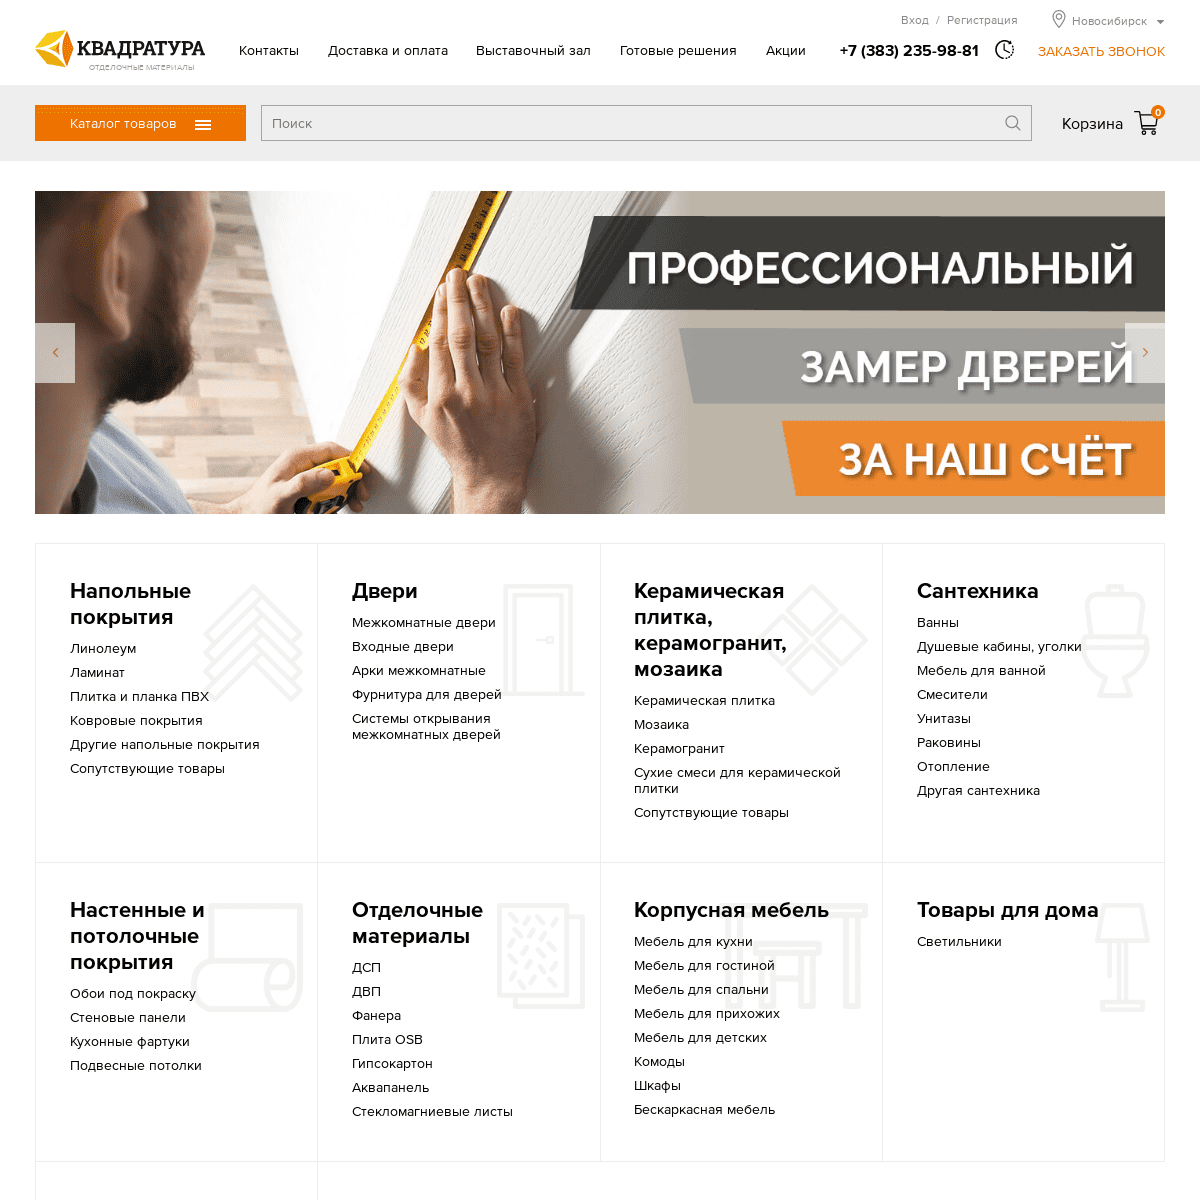 A complete backup of https://kwadratura.ru